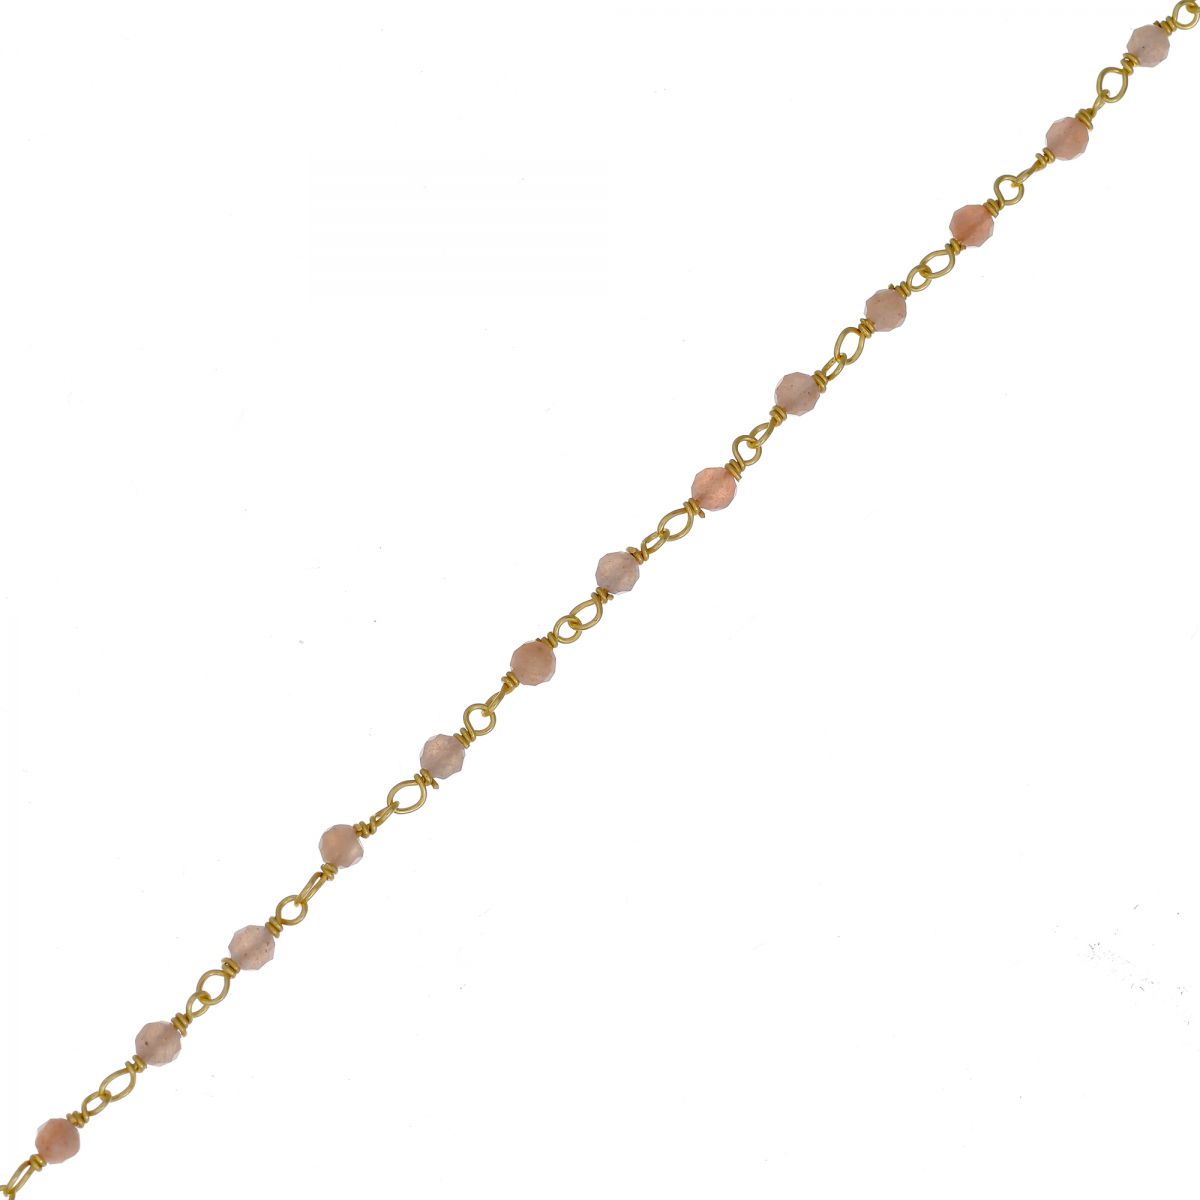 ff bracelet 3mm peach moonstone beaded gold plated